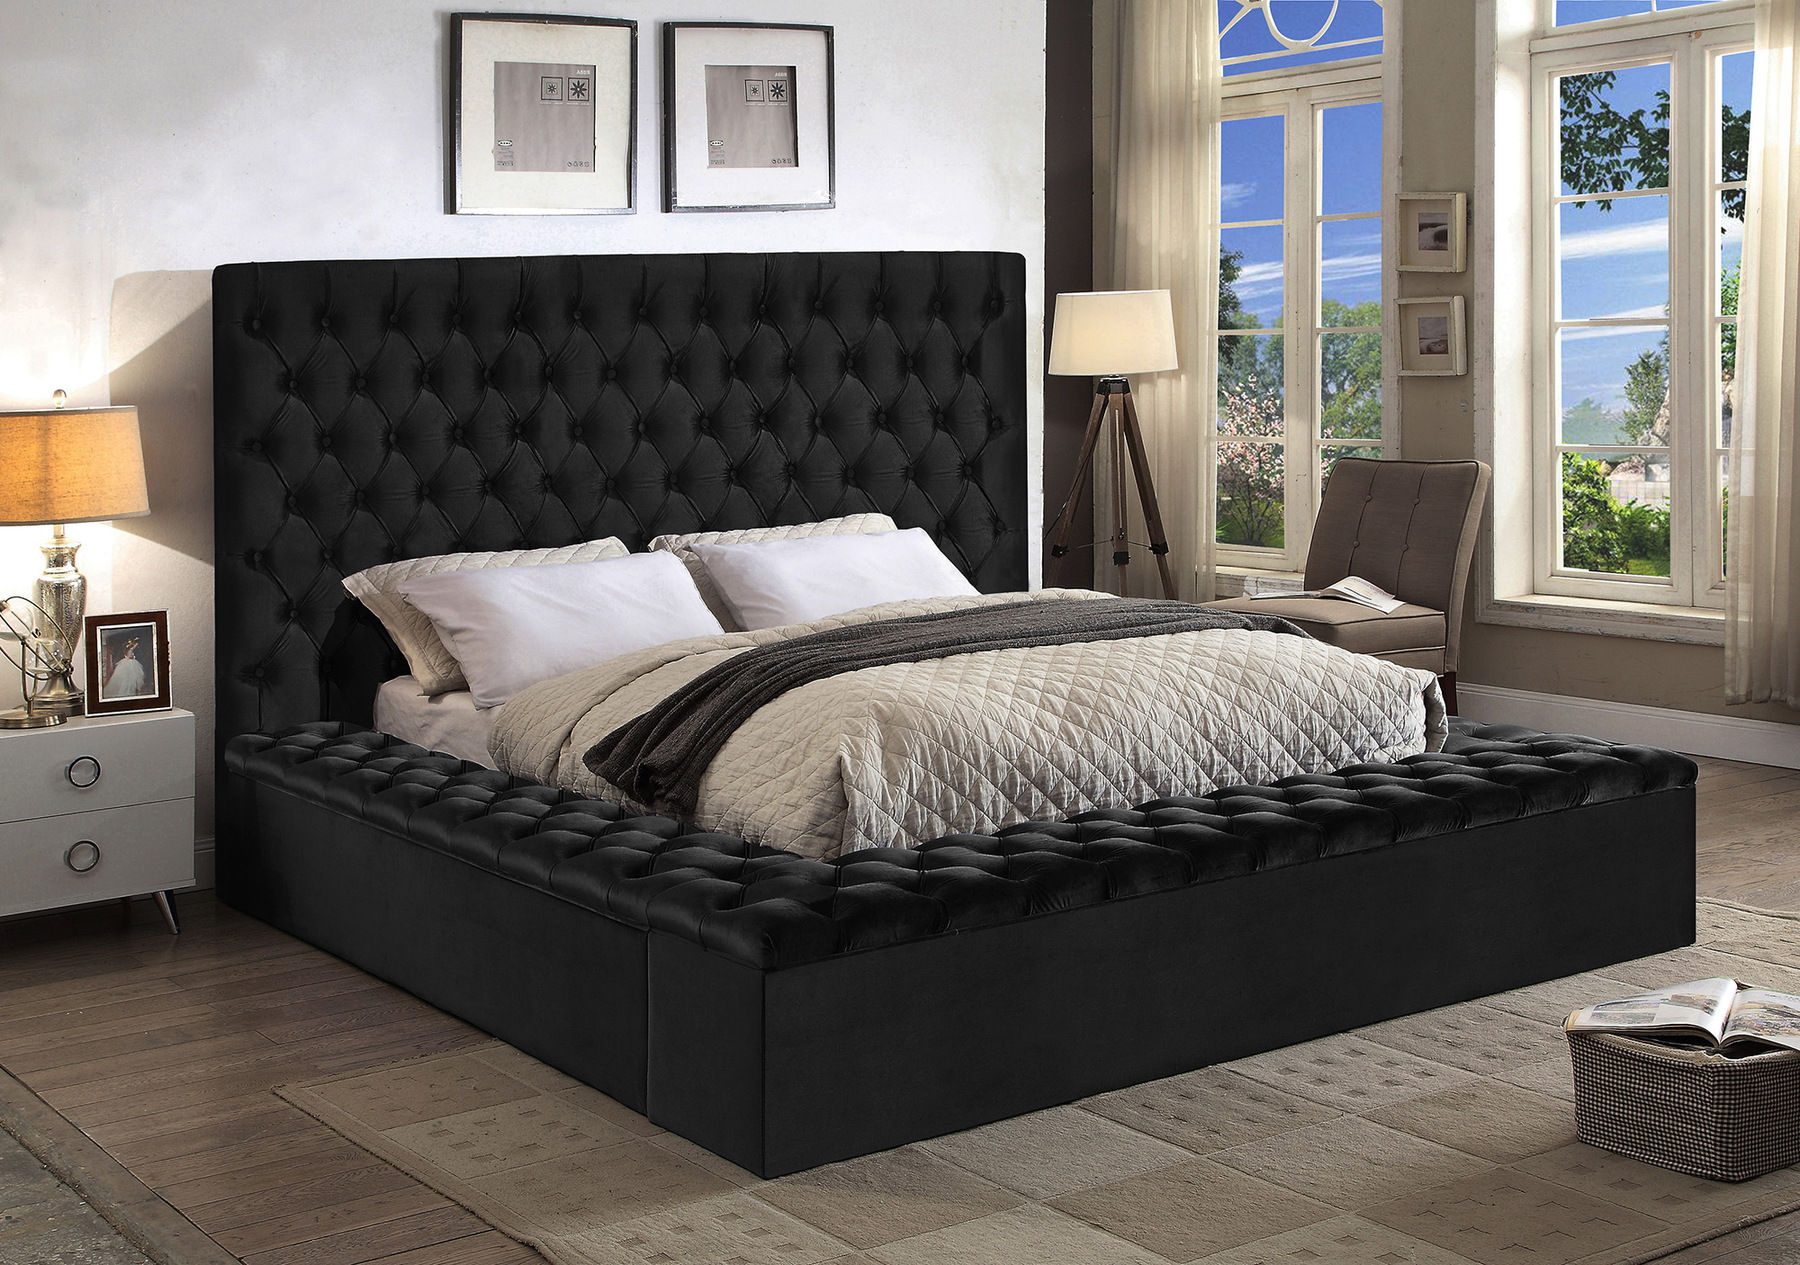 Decorative and Convenient Luxury Bedding